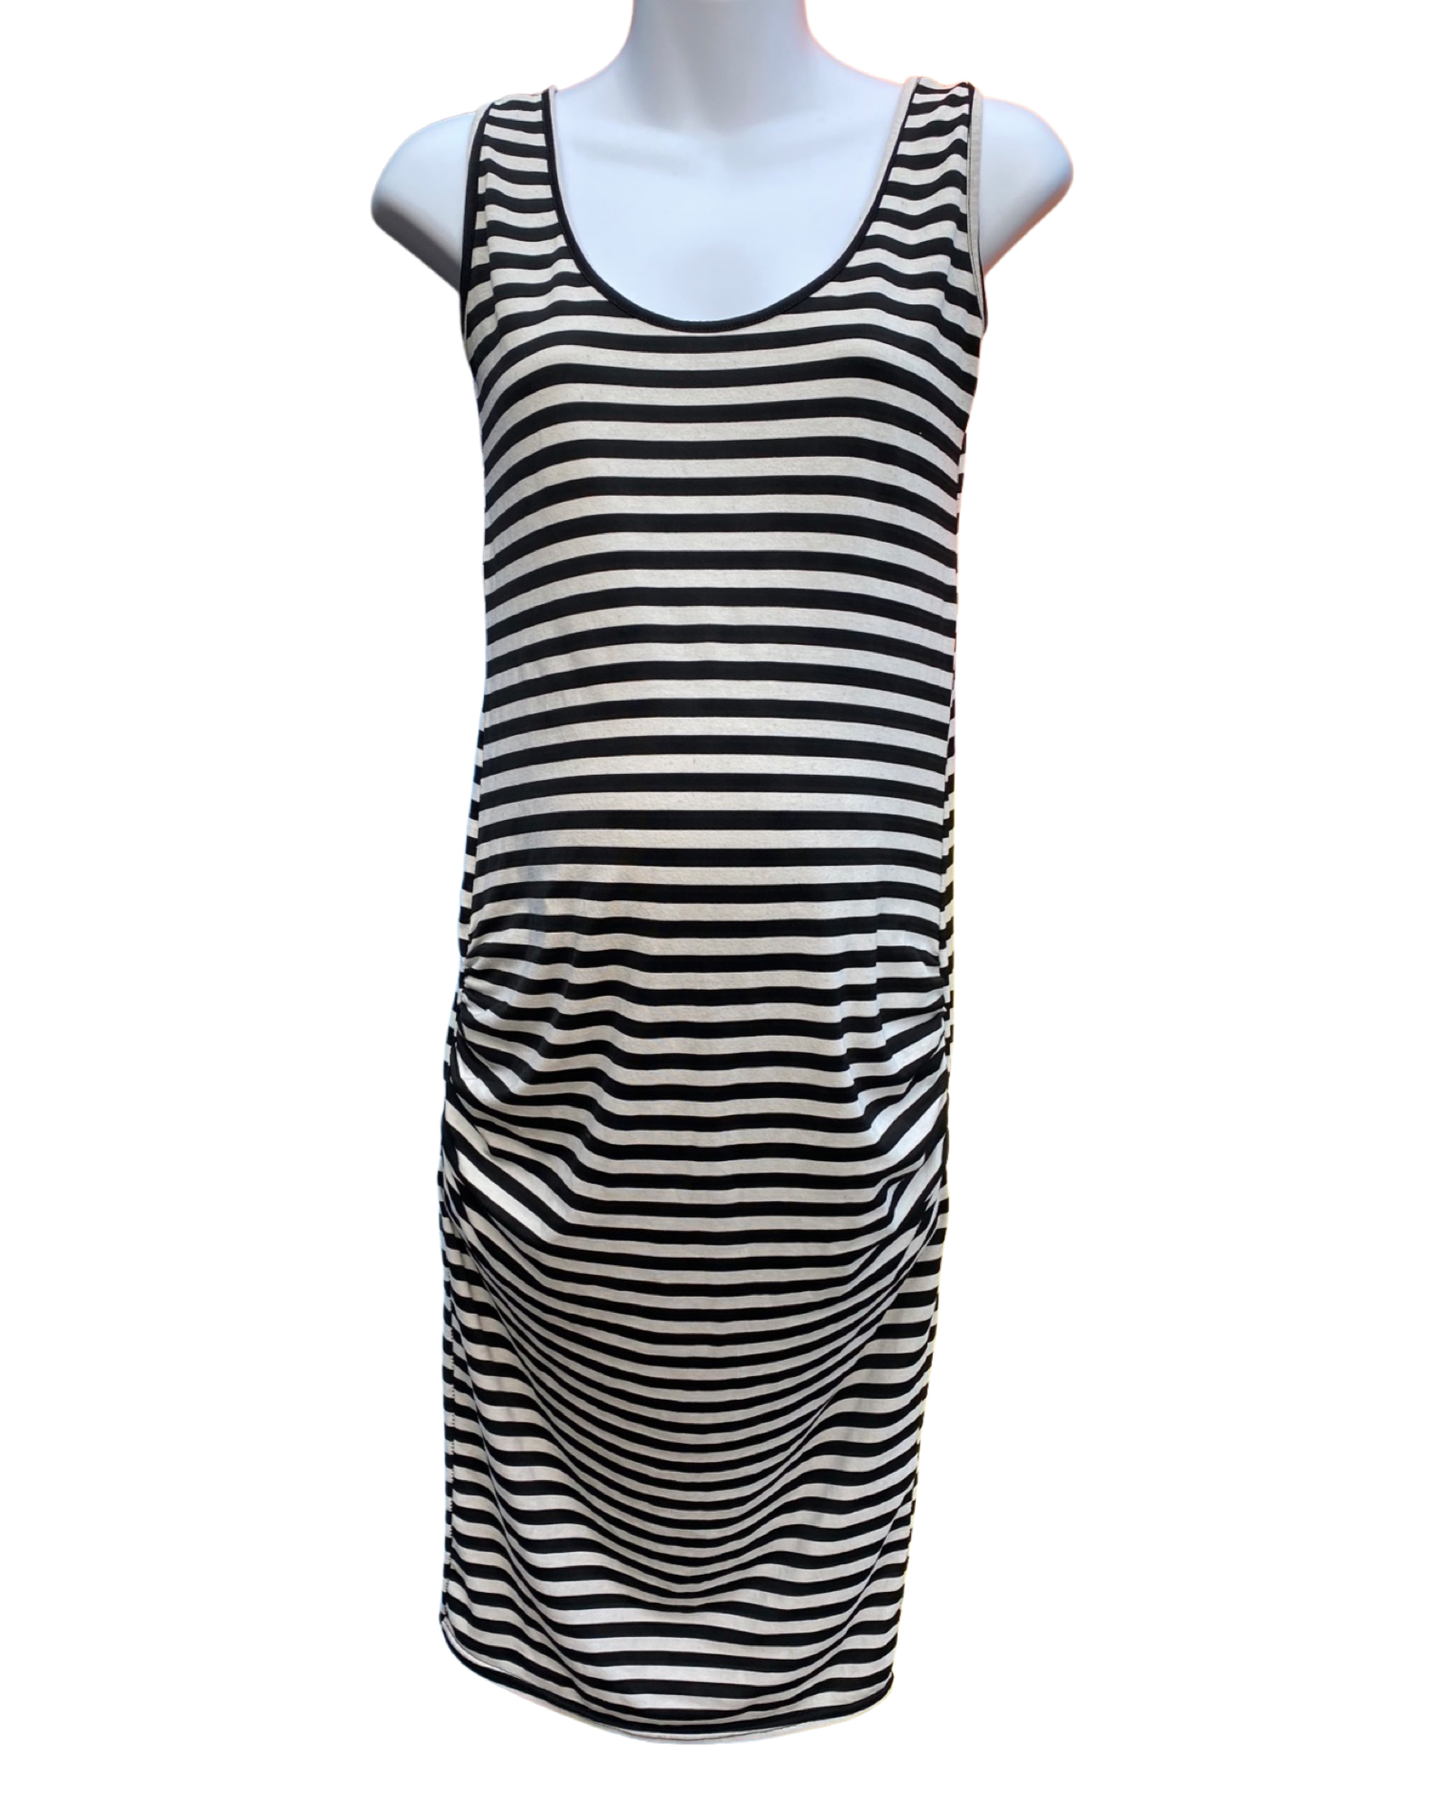 Boohoo maternity striped vest dress (size 12)